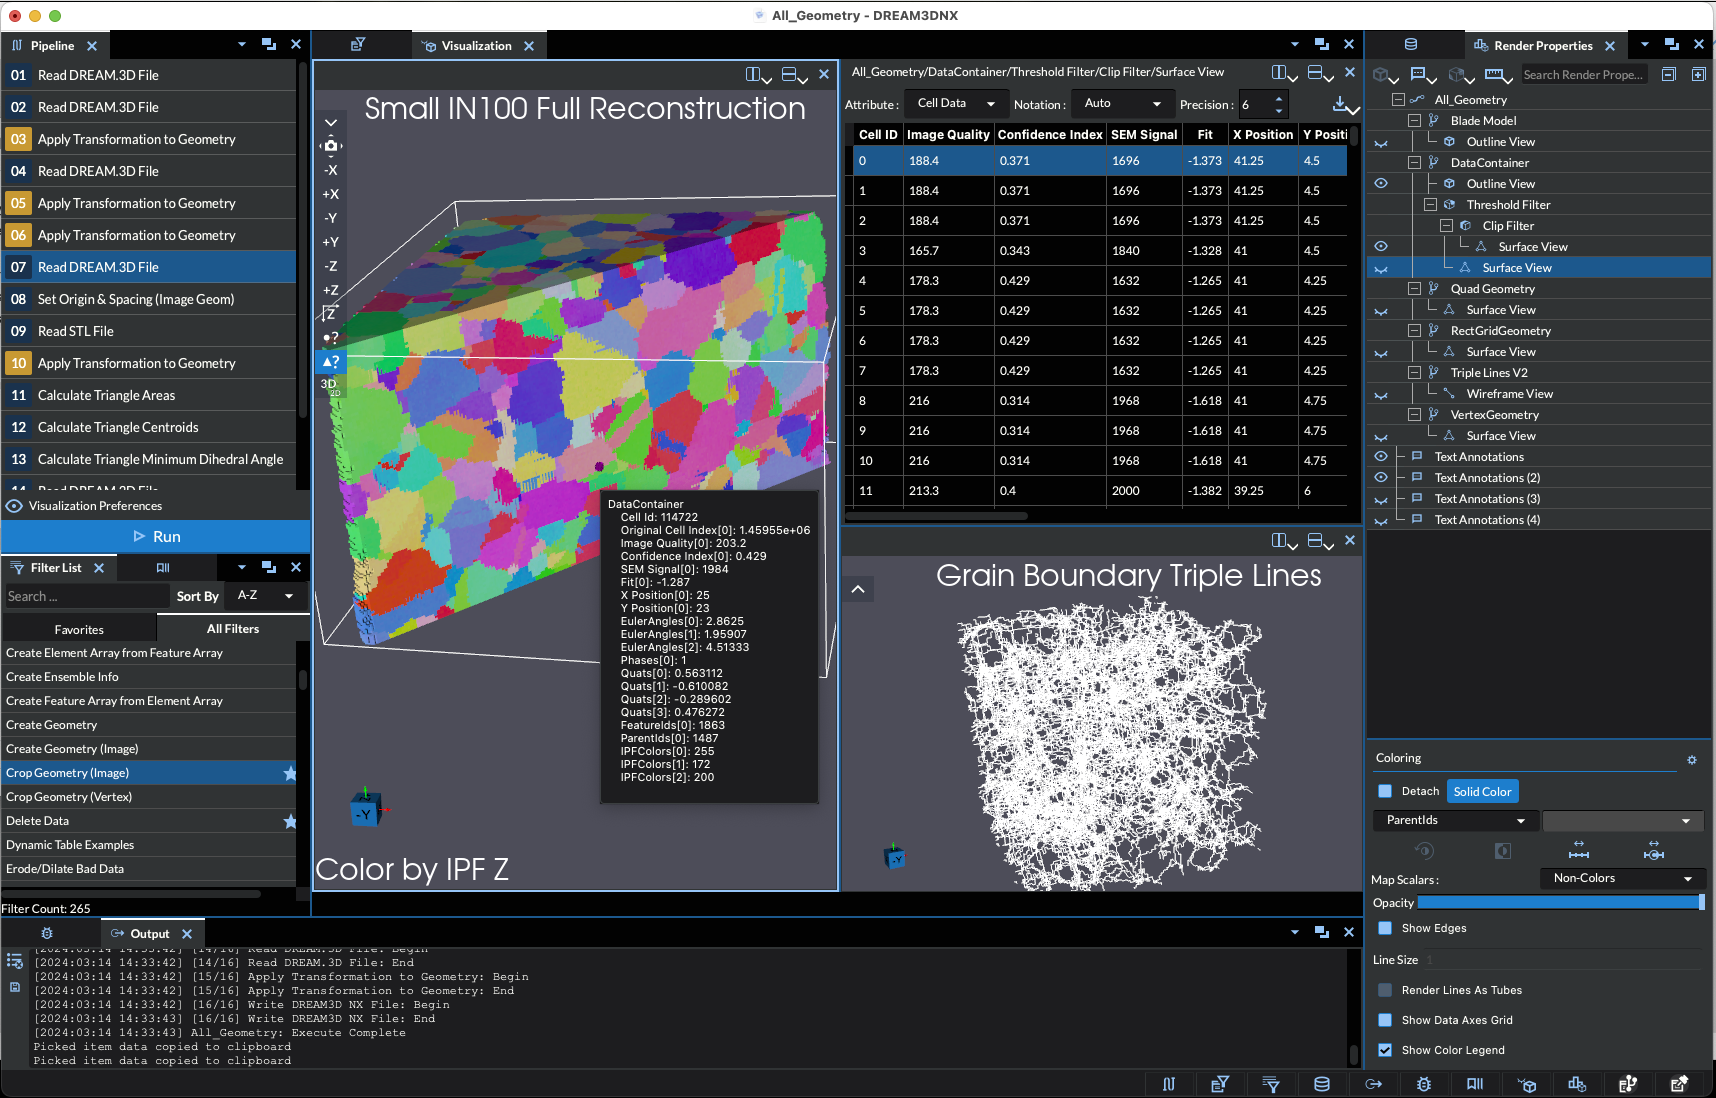 DREAM3D-NX including visualization capabilities